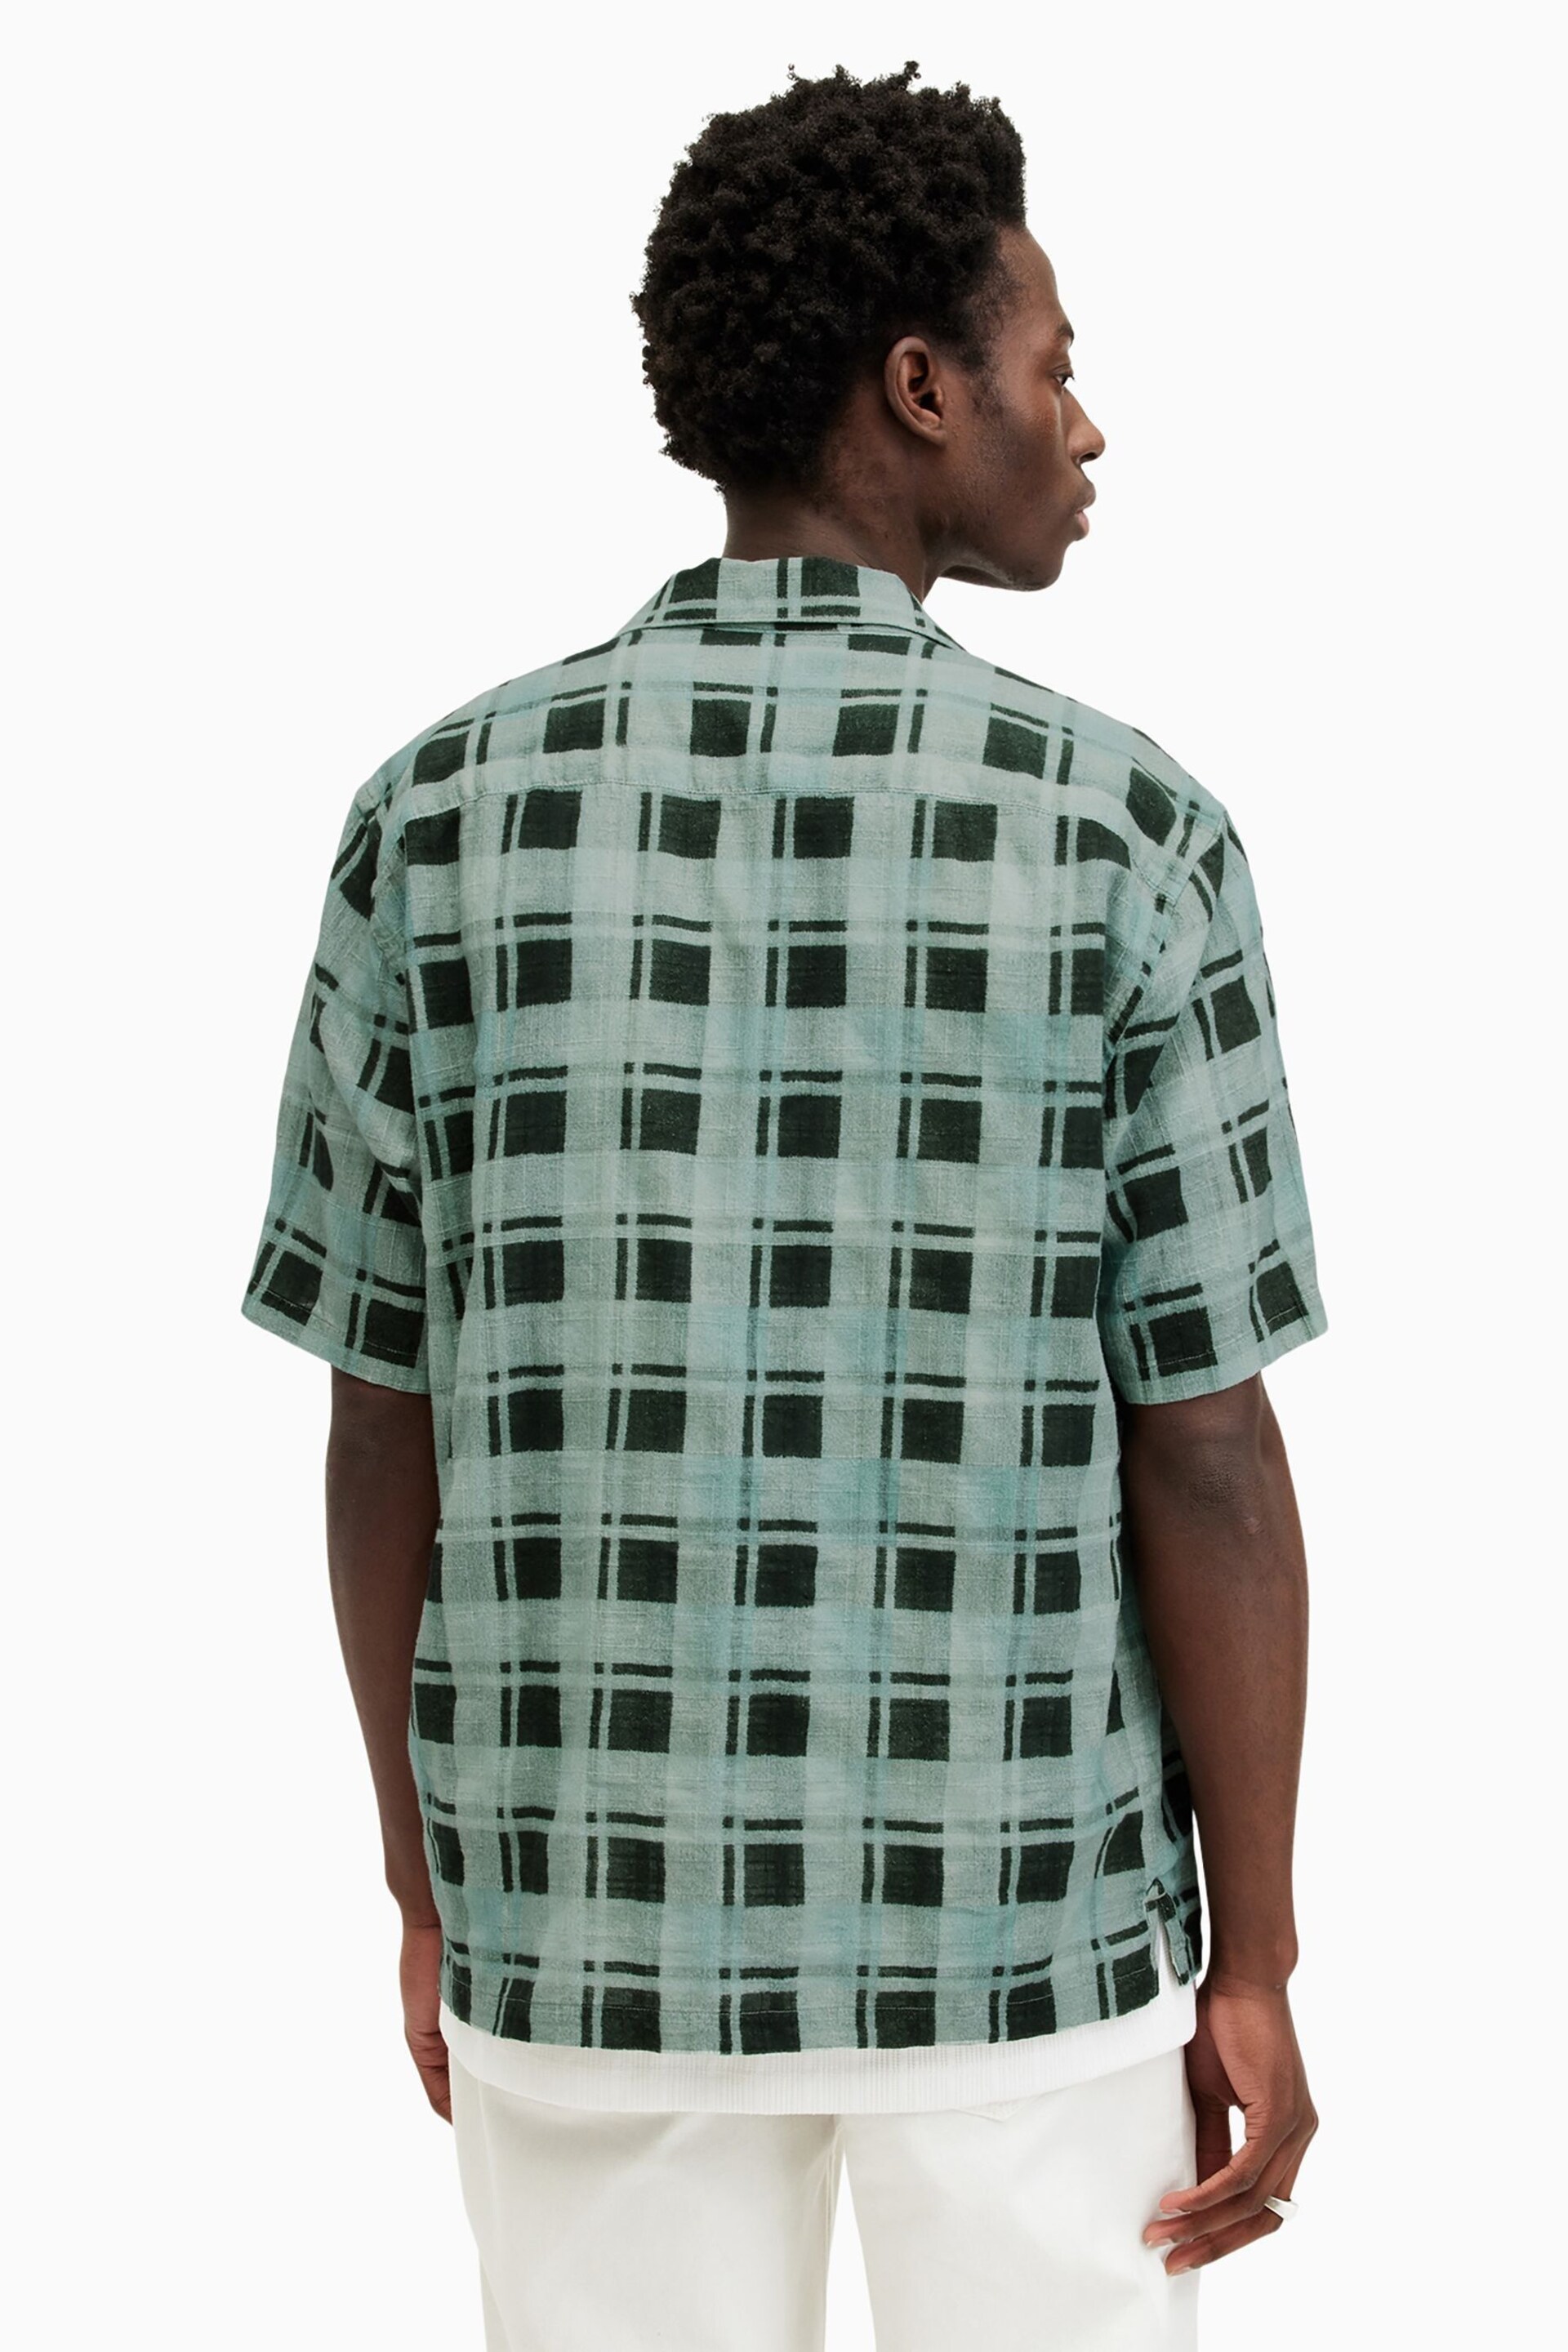 AllSaints Green Big Sur Short Sleeve Shirt - Image 6 of 7